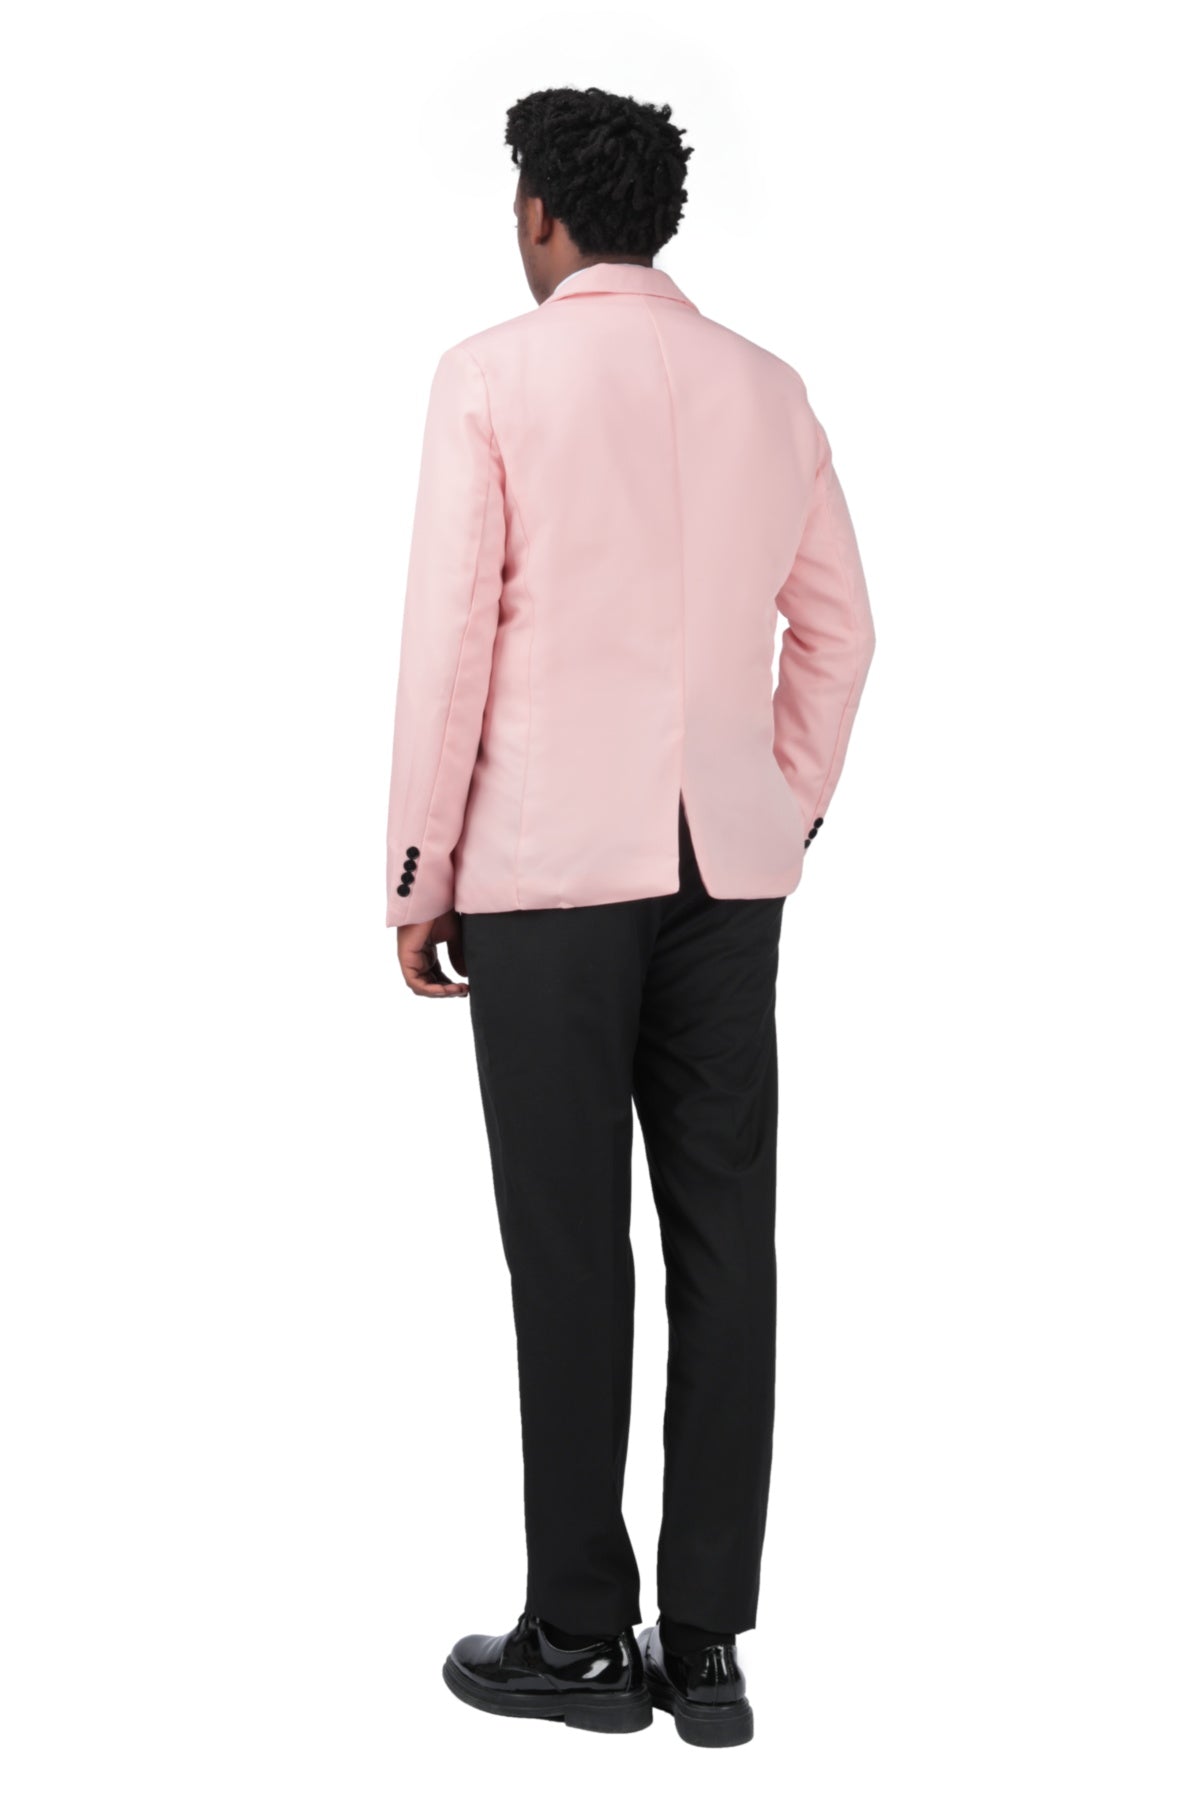 Pink Top Brand Punjabi Salwar Coat Pant Men Bespoke Suit, High Quality Slim  Fit T/R Fabric Suits for Men - China Men Suit and Bespoke Suit price |  Made-in-China.com